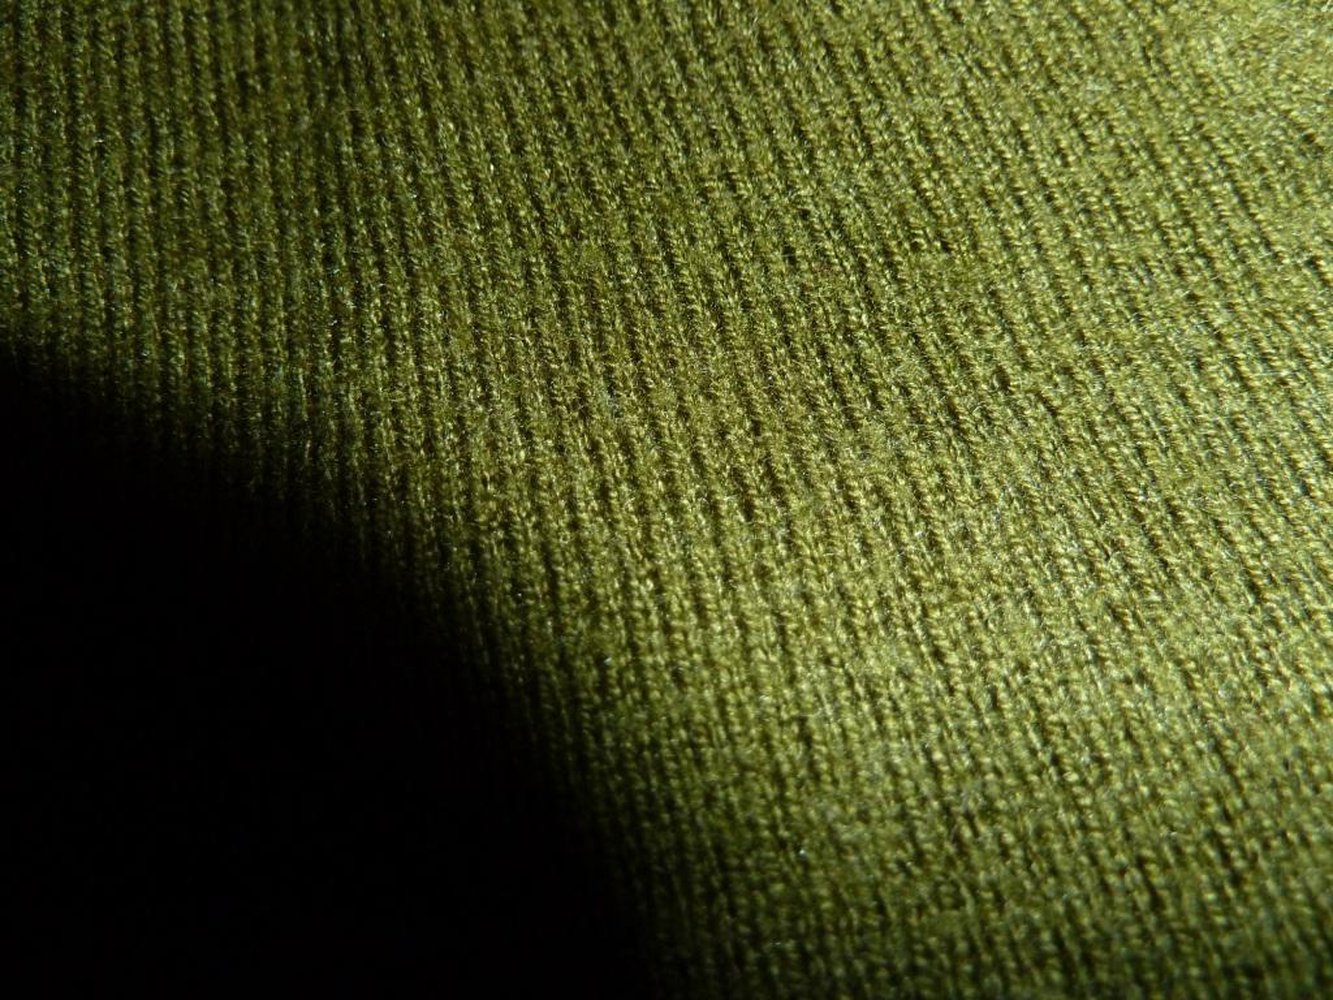 grüner / khaki Pullover, V-Ausschnitt, Größe 32 / 34 / 36